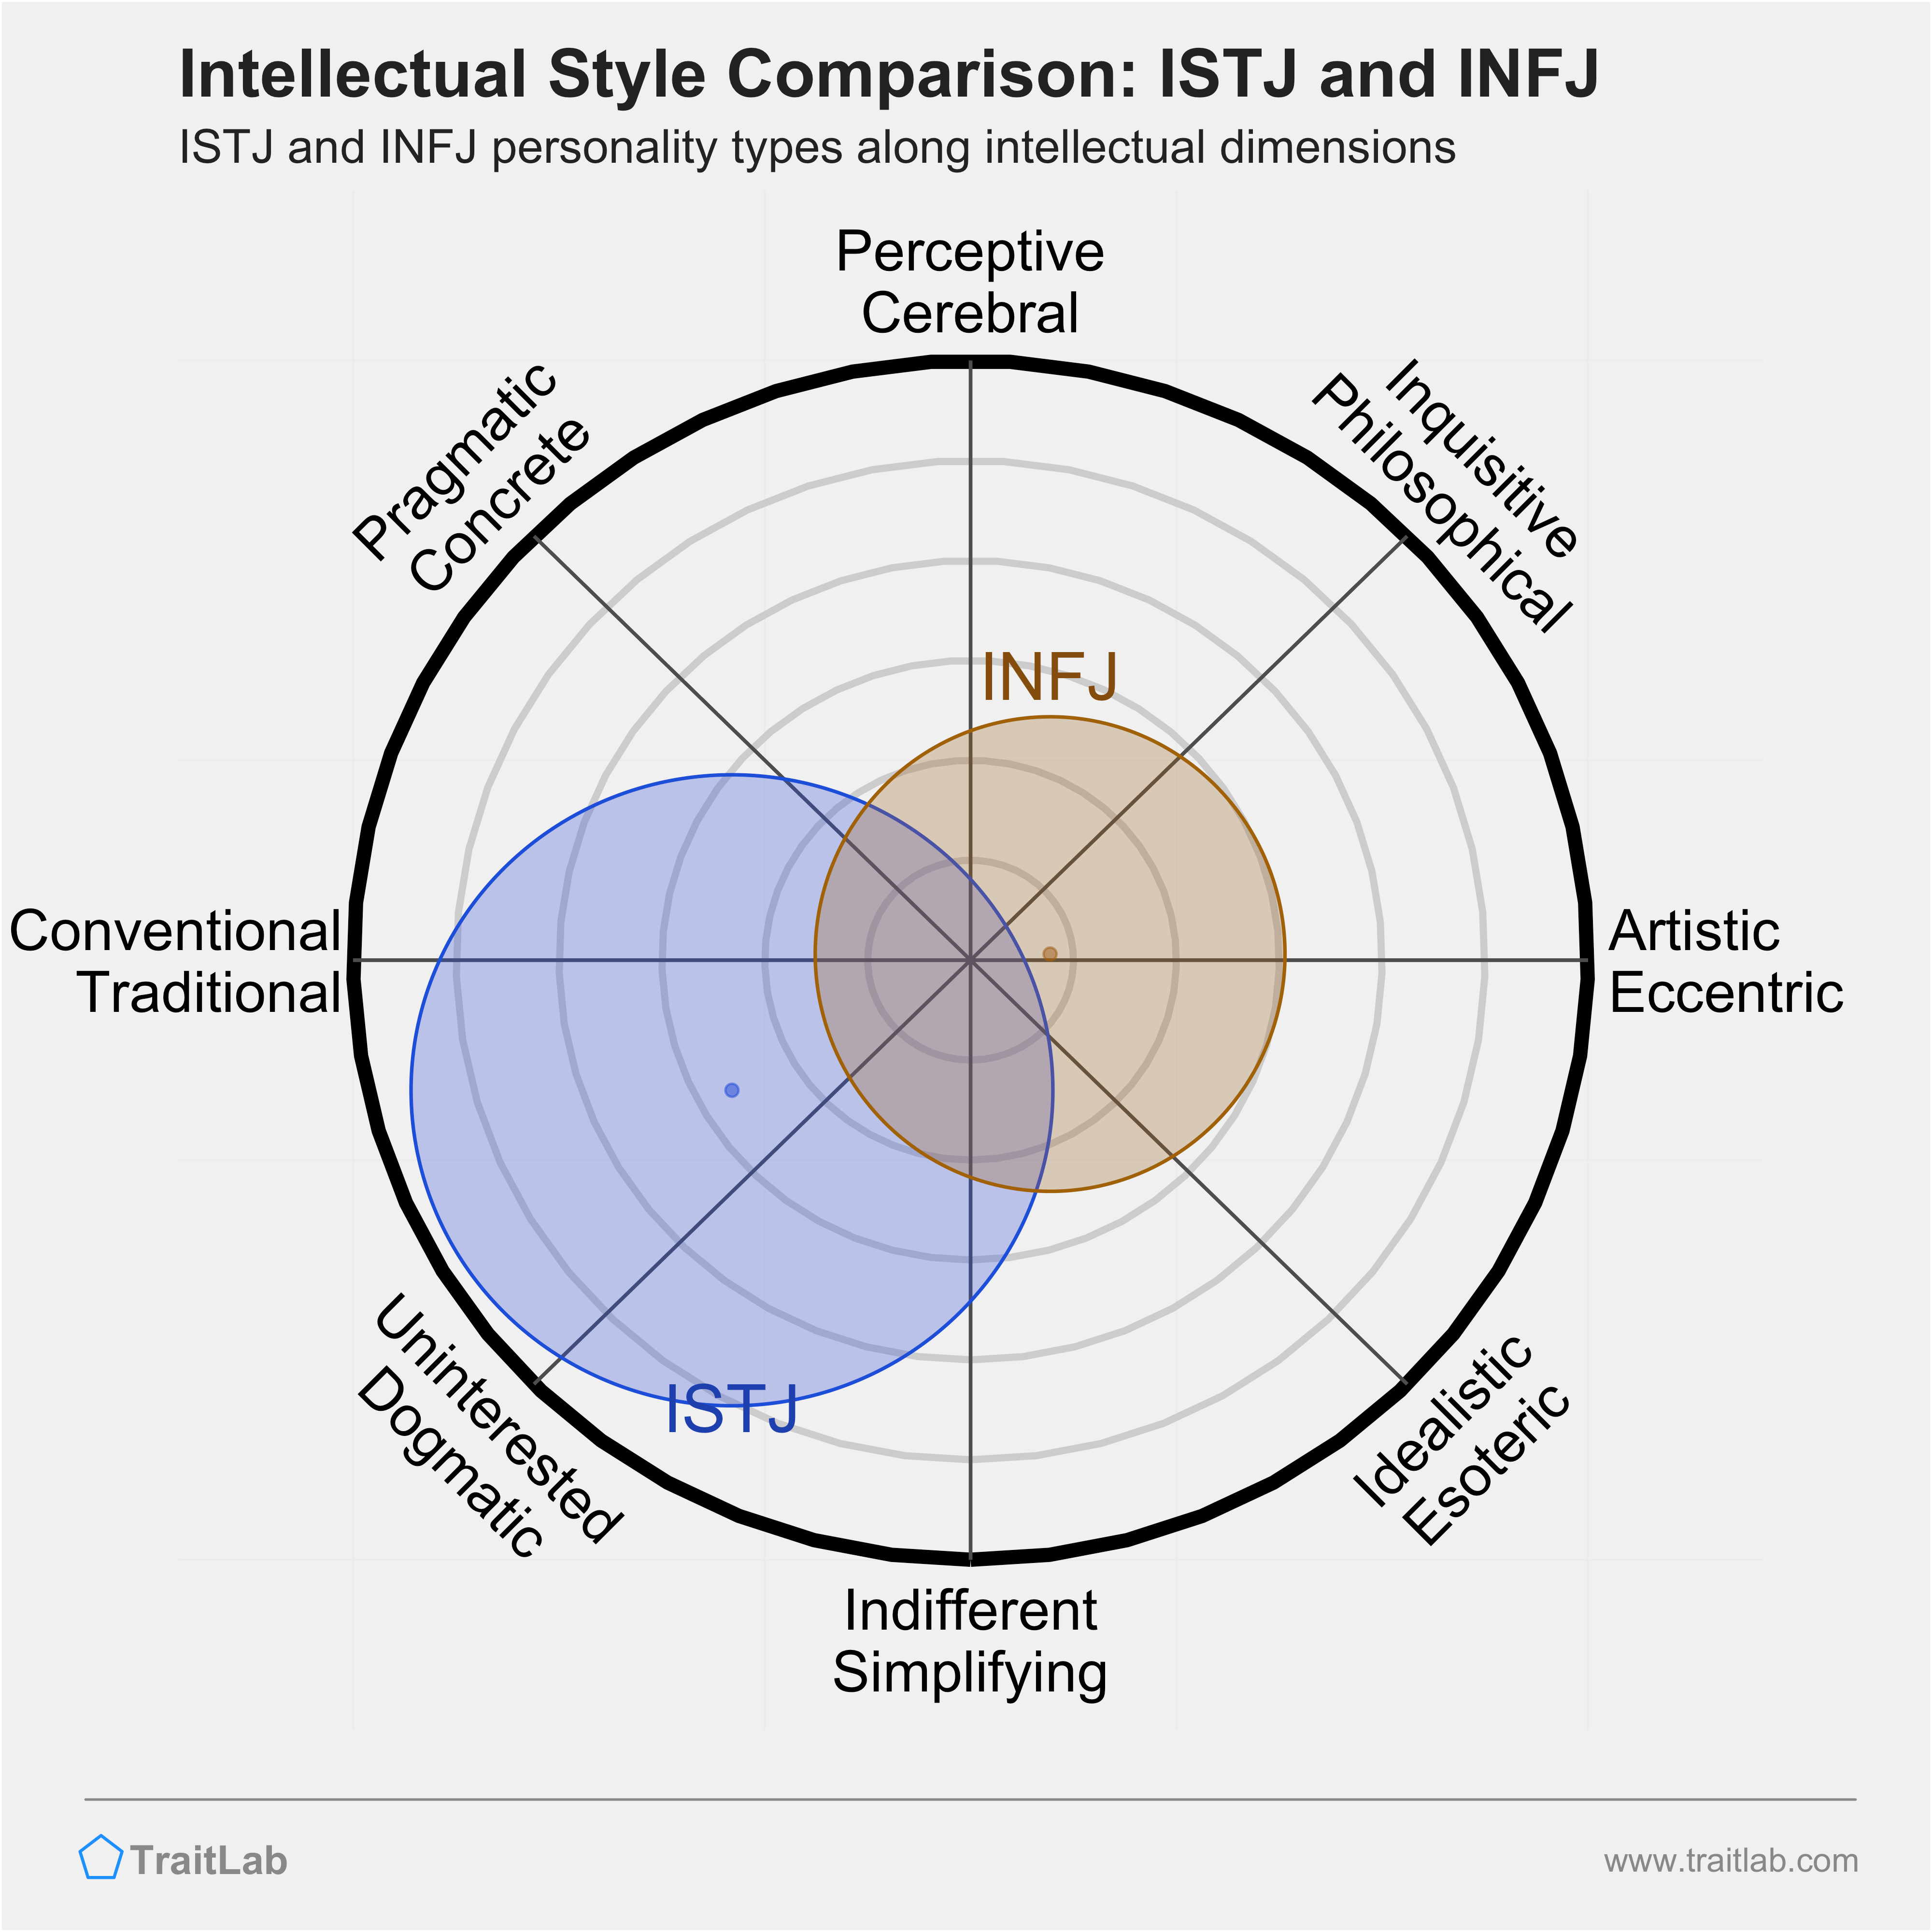 ISTJ and INFJ comparison across intellectual dimensions